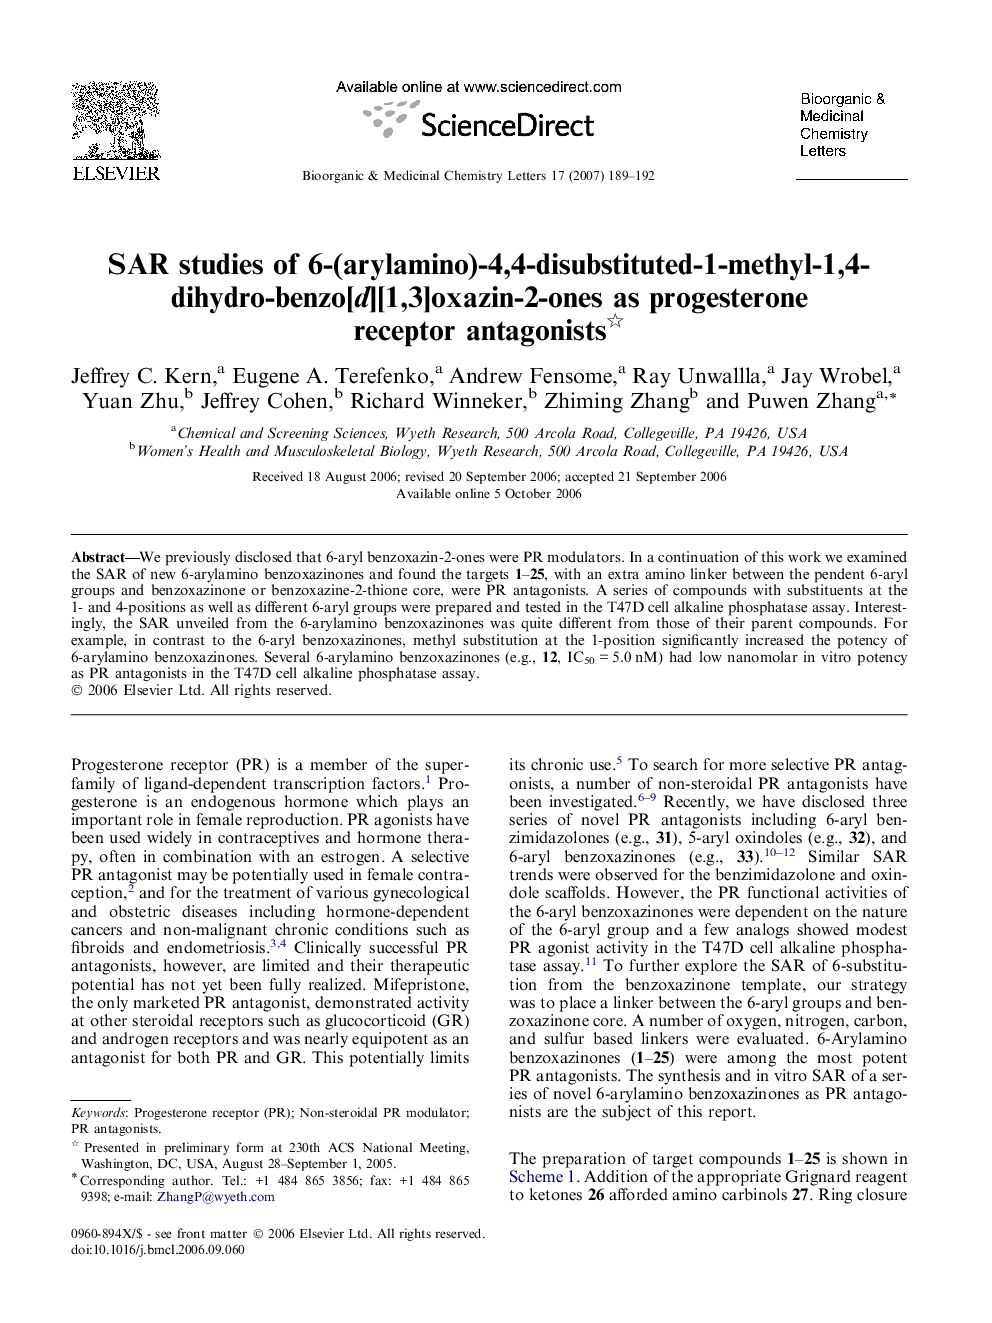 SAR studies of 6-(arylamino)-4,4-disubstituted-1-methyl-1,4-dihydro-benzo[d][1,3]oxazin-2-ones as progesterone receptor antagonists 